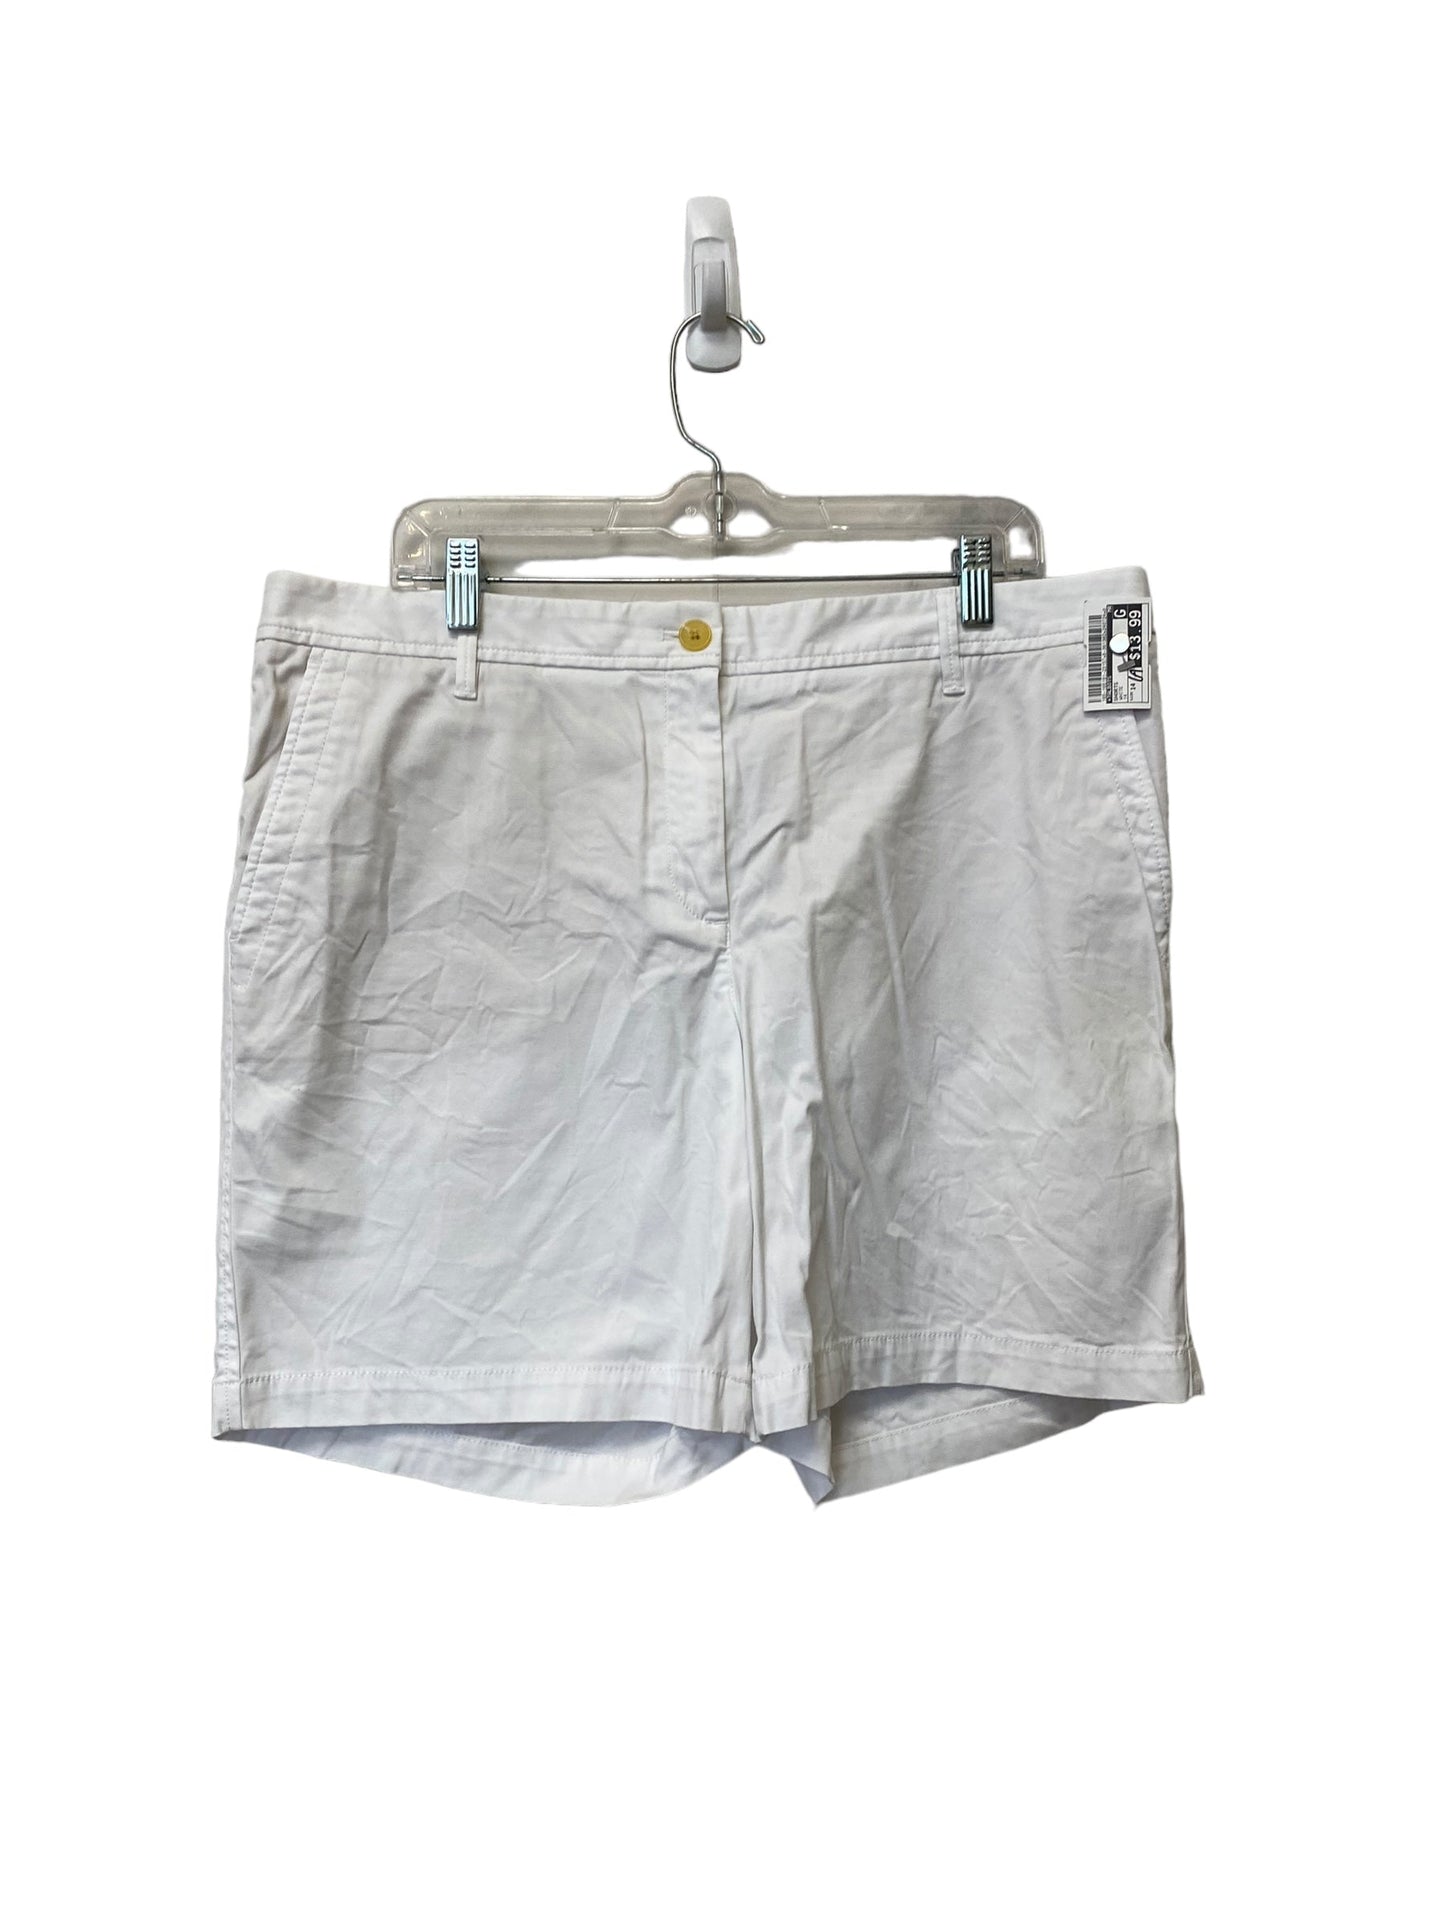 White Shorts Talbots, Size 14